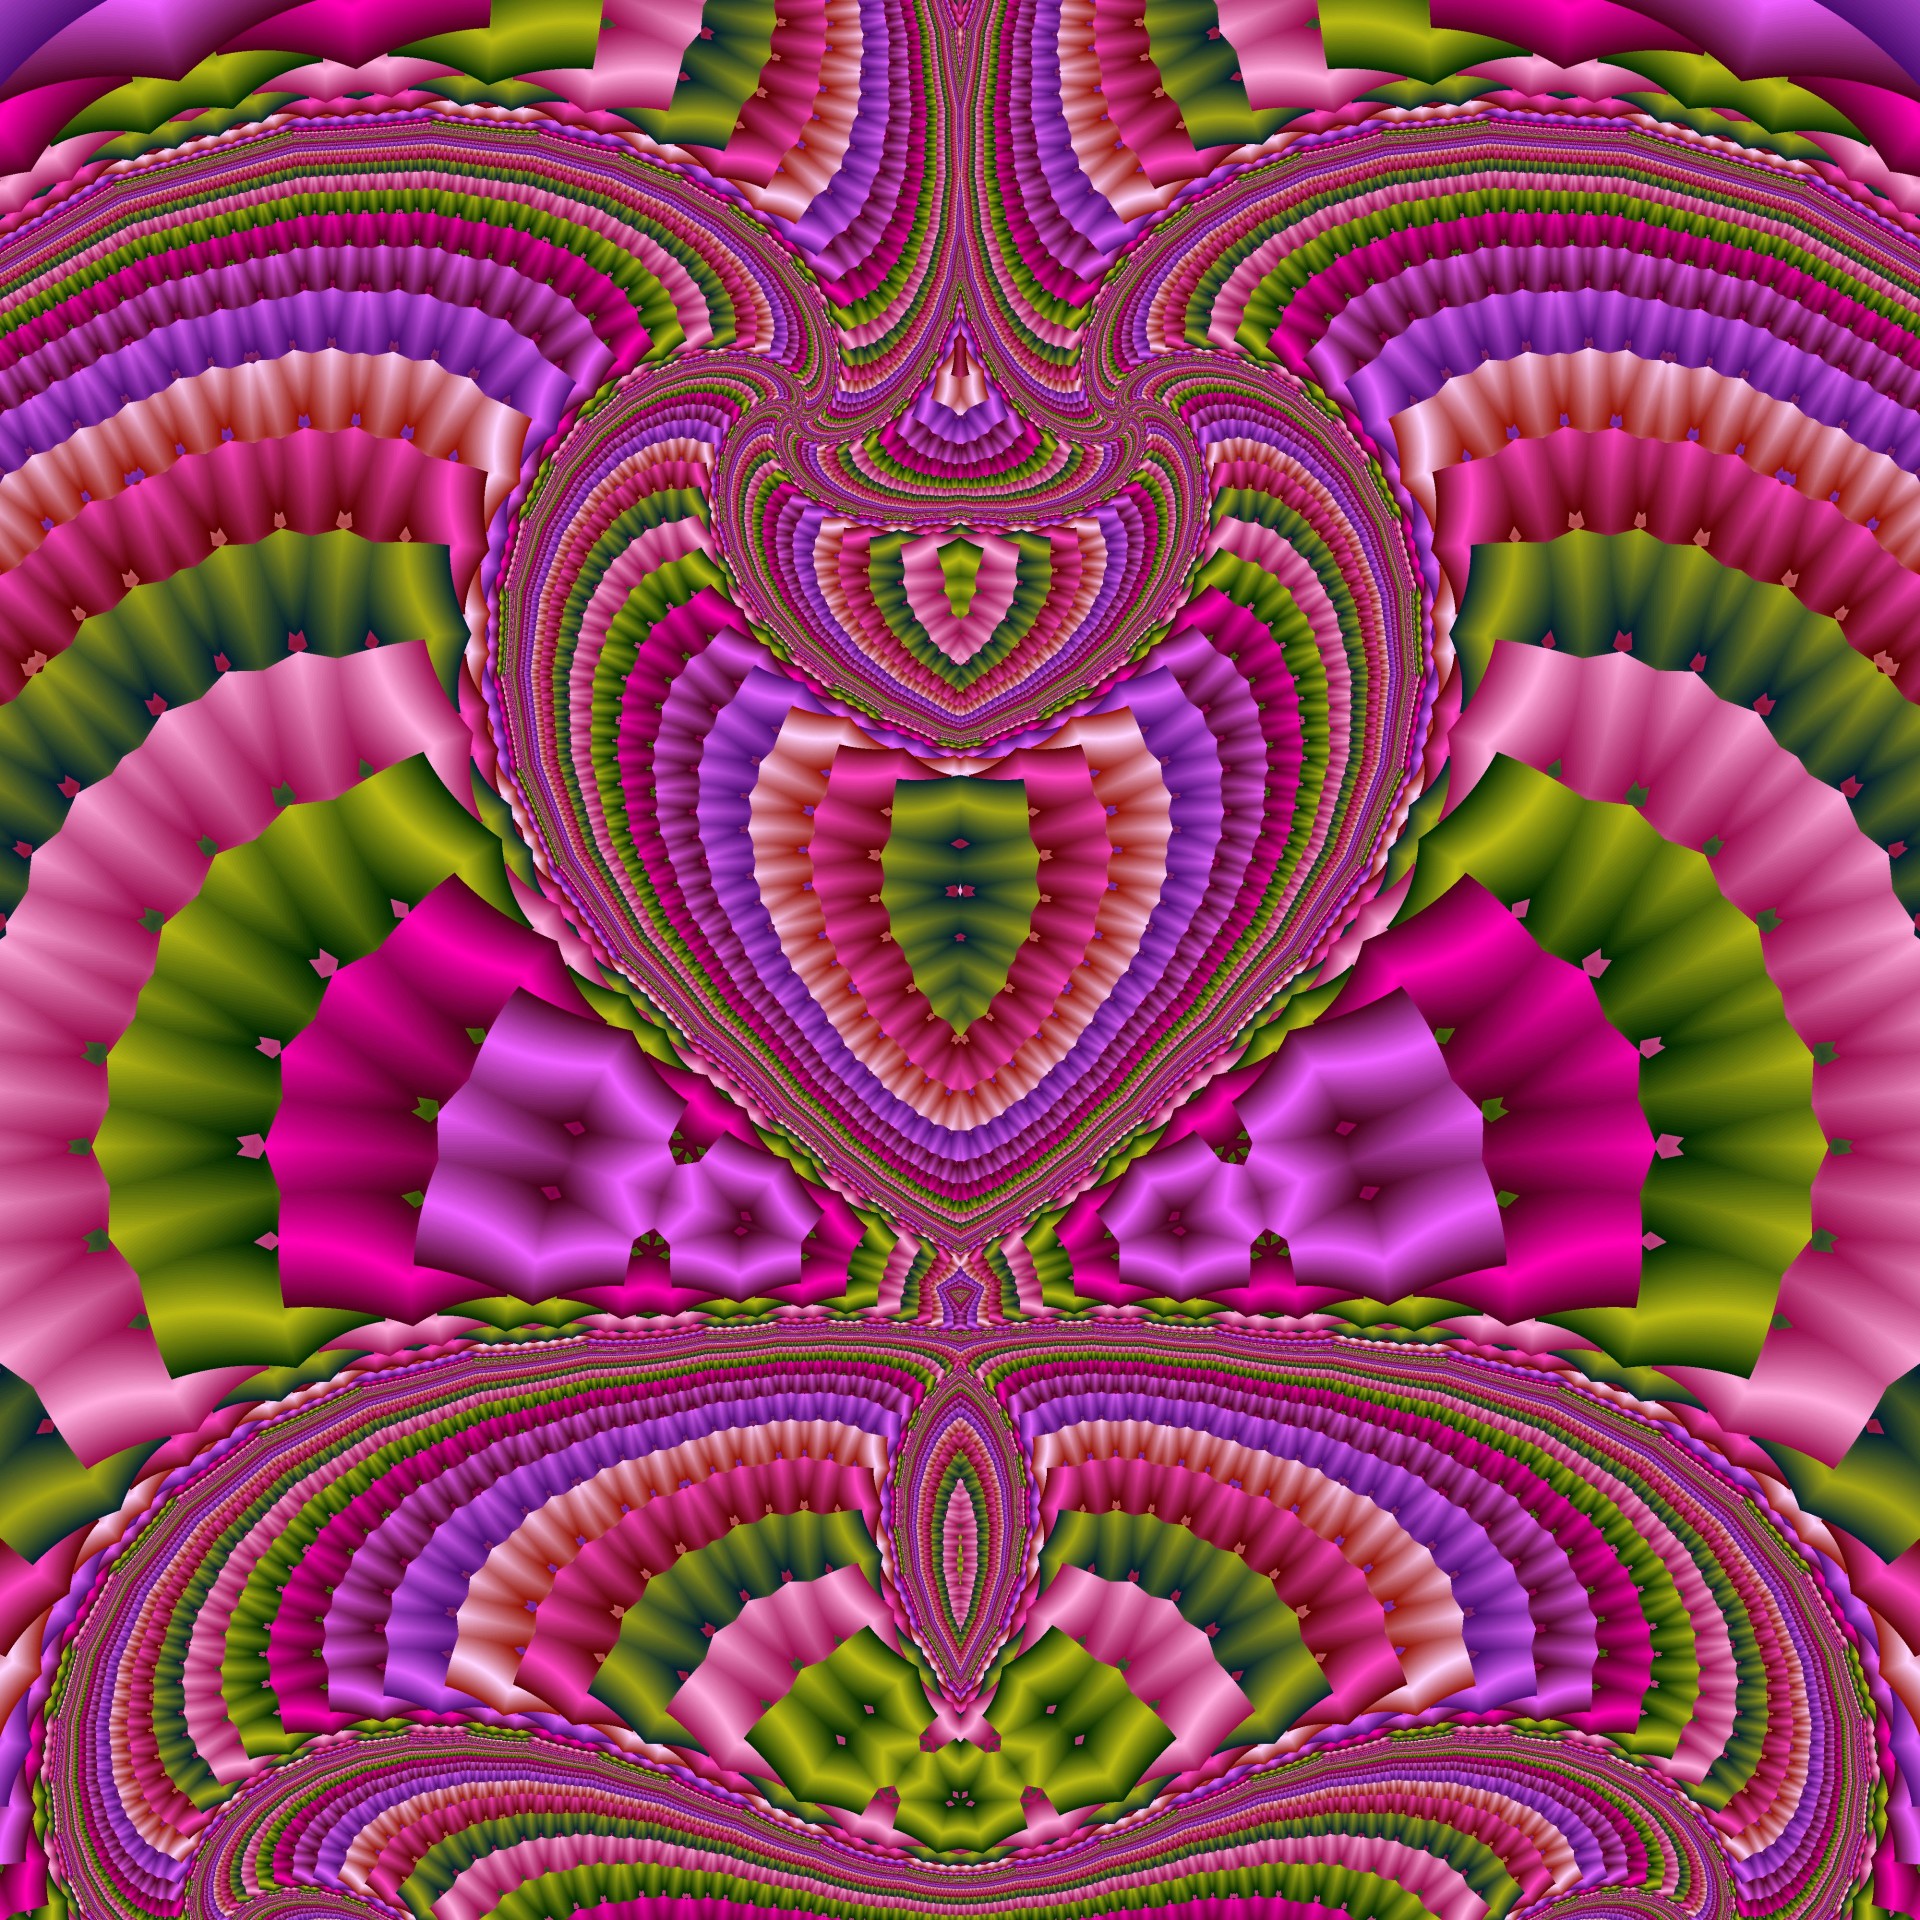 Curcan fractal